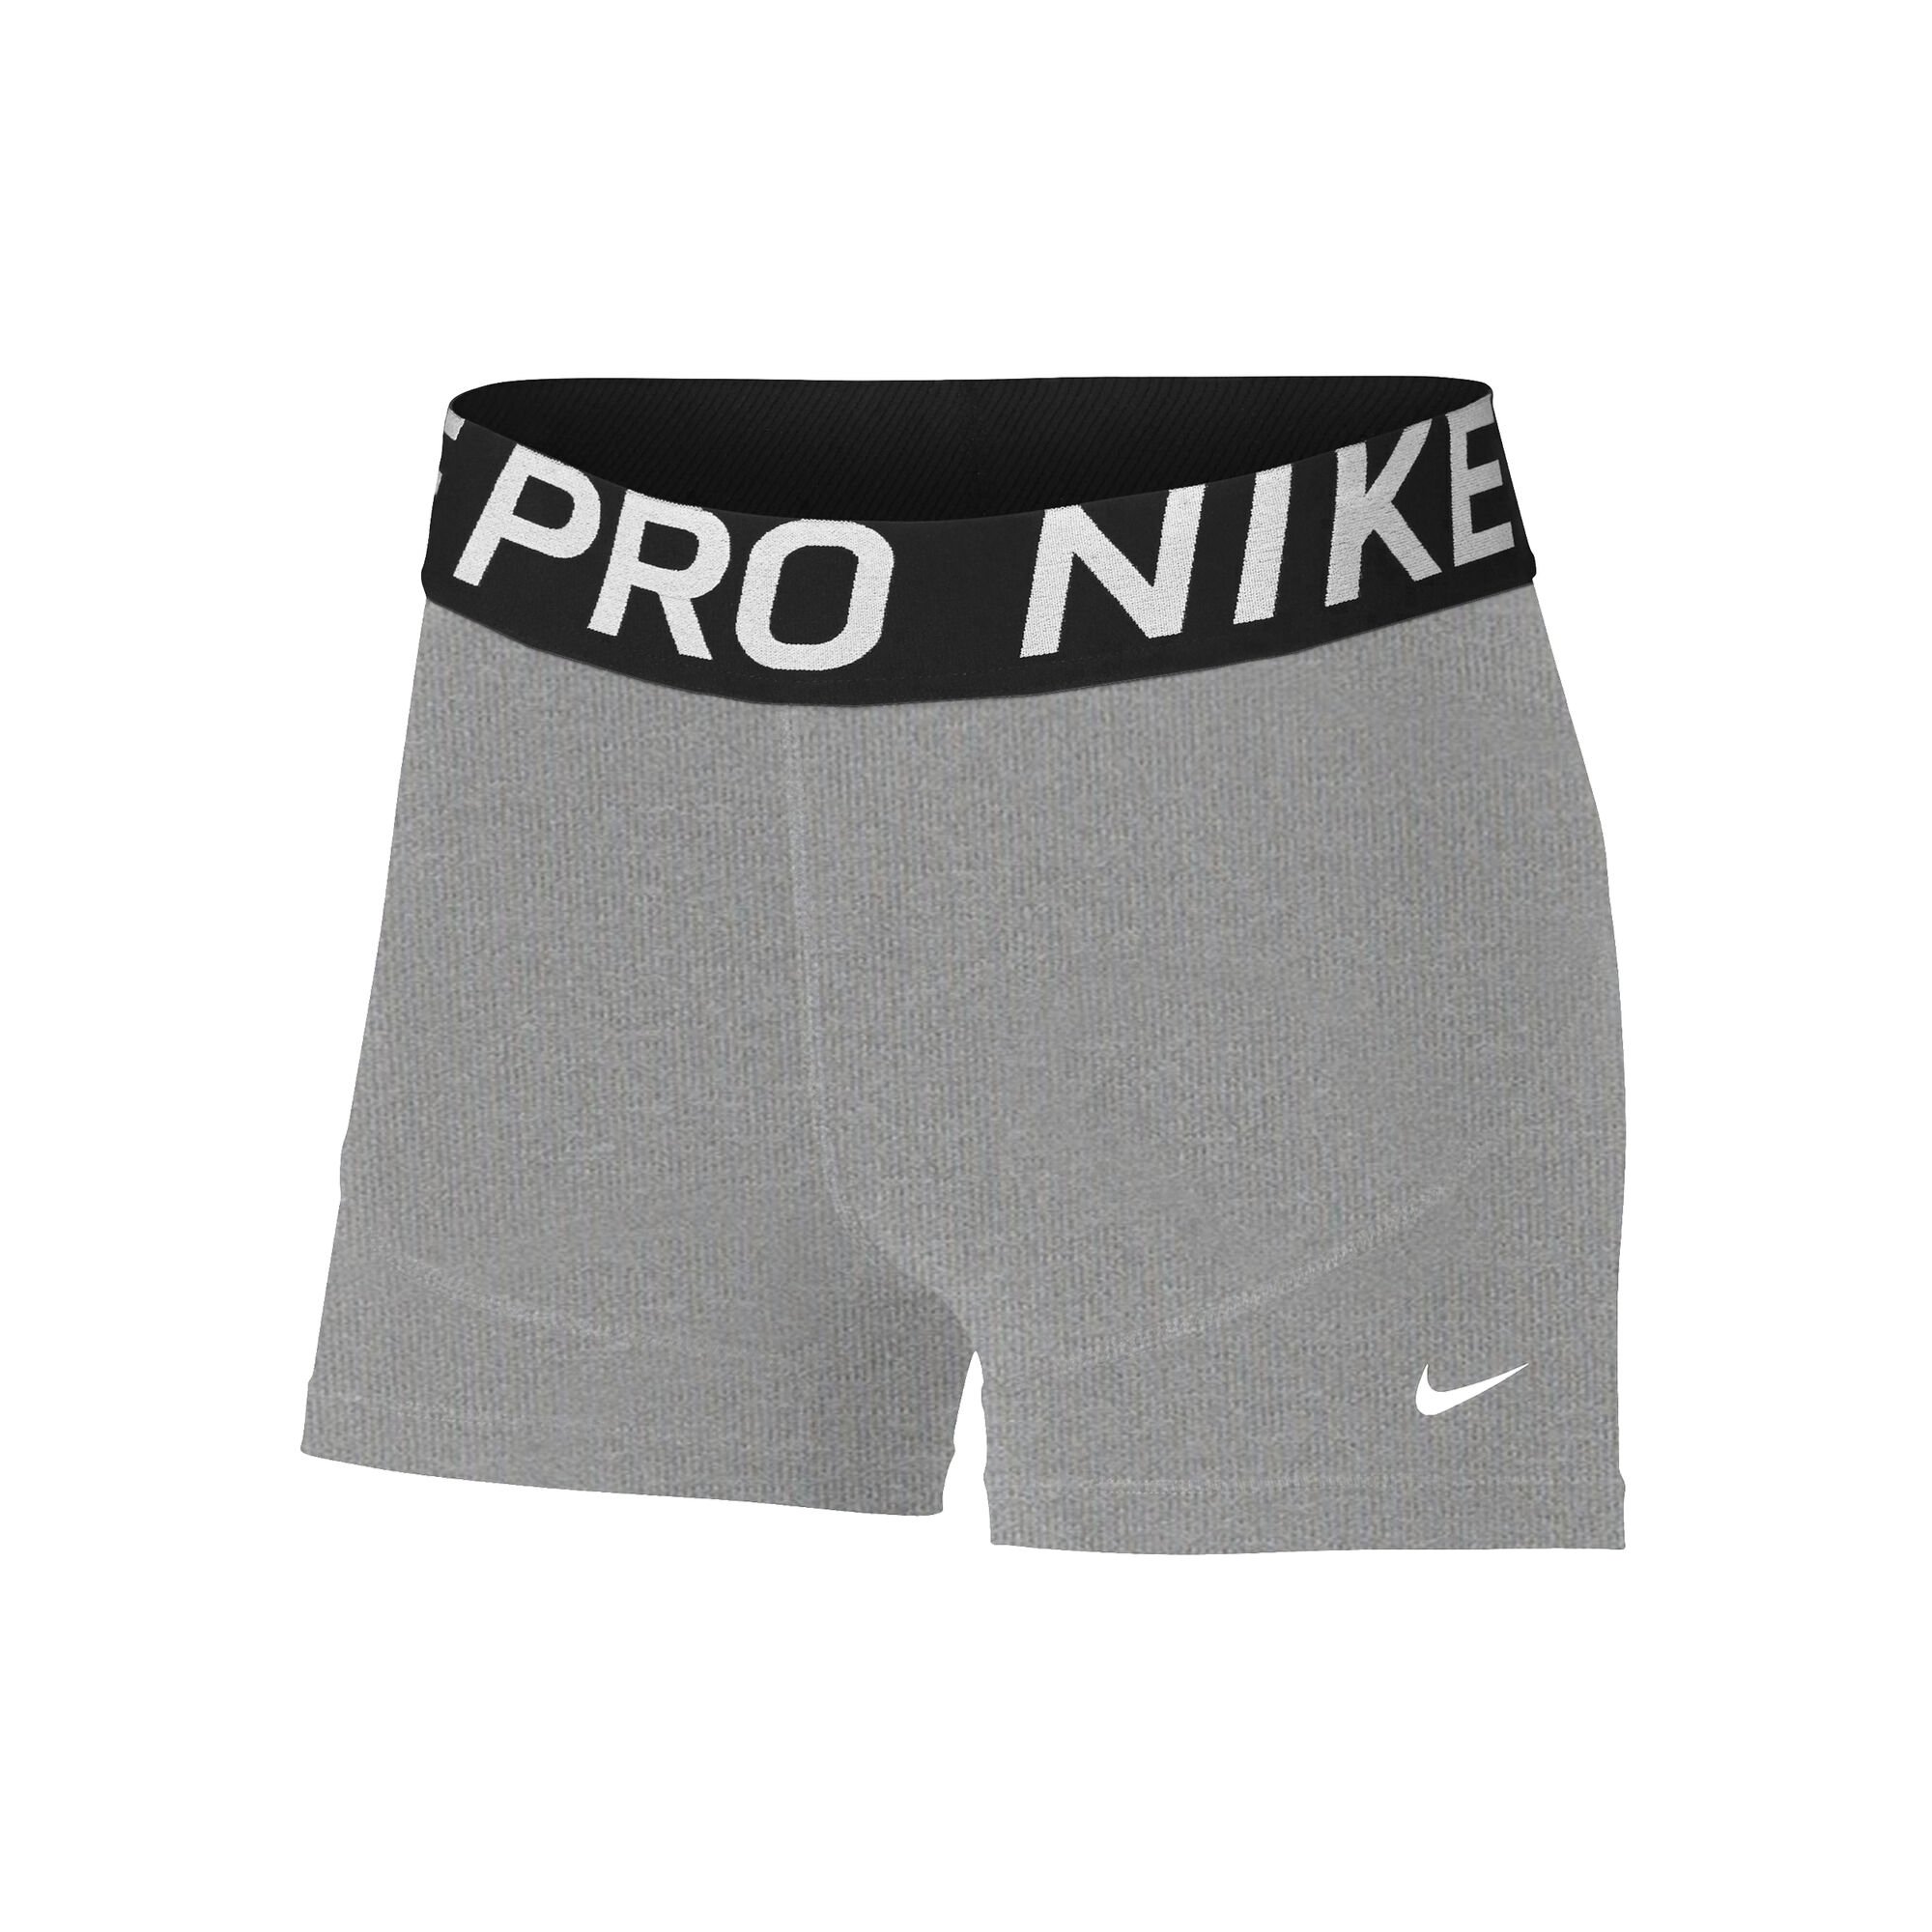 Nike Pro Shorts - Gris, Blanco compra online